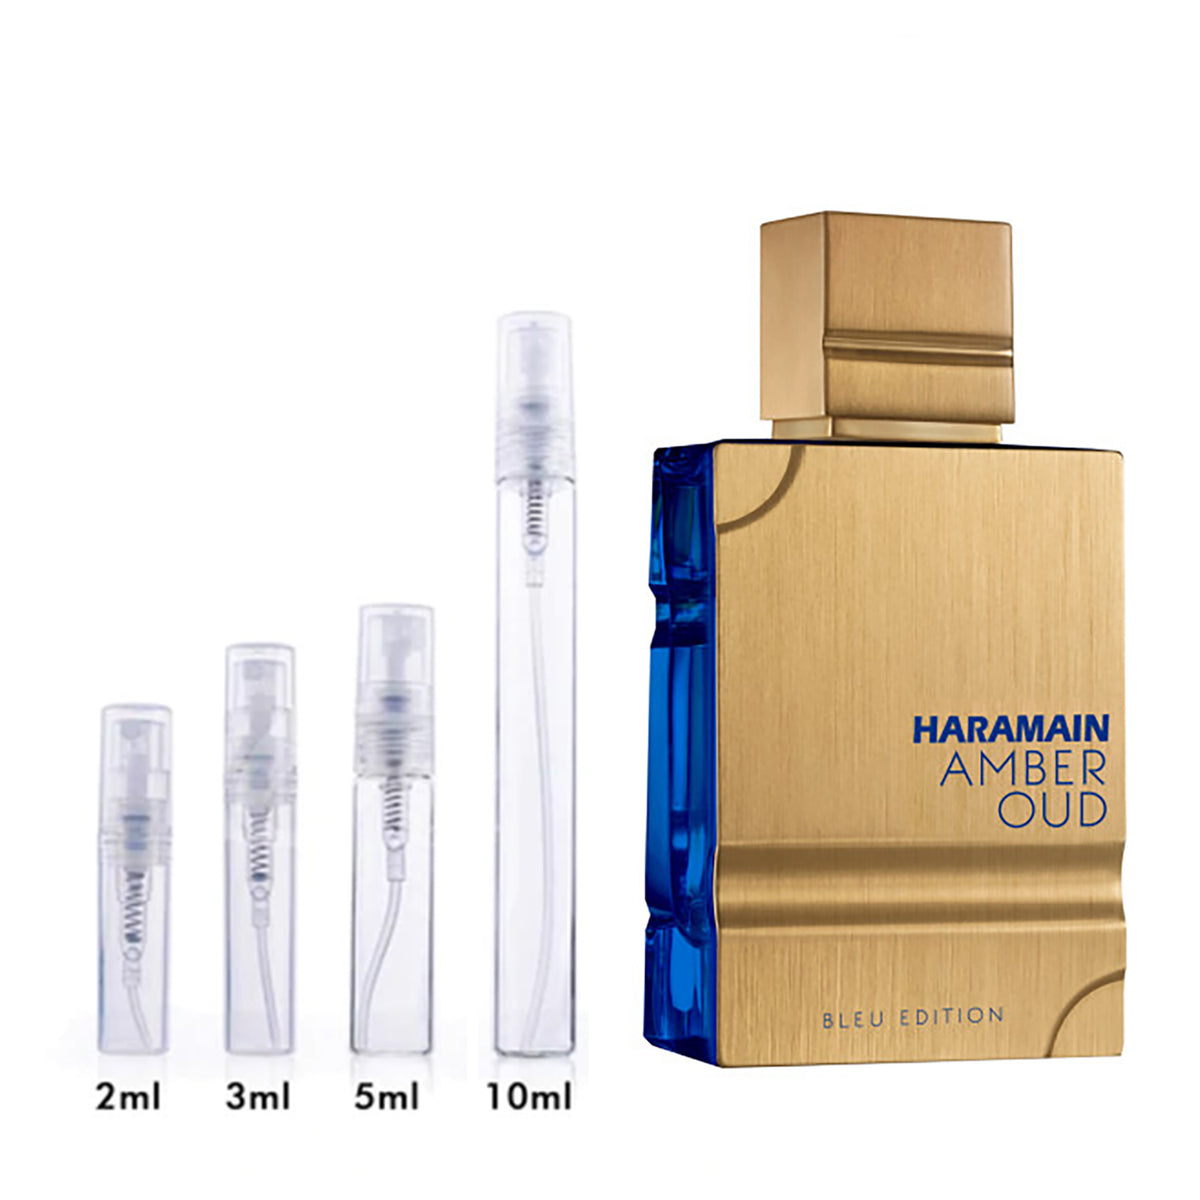 HARAMAIN AMBER OUD BLUE EDITION #fragrancebyjordan #teejay#haramainbl